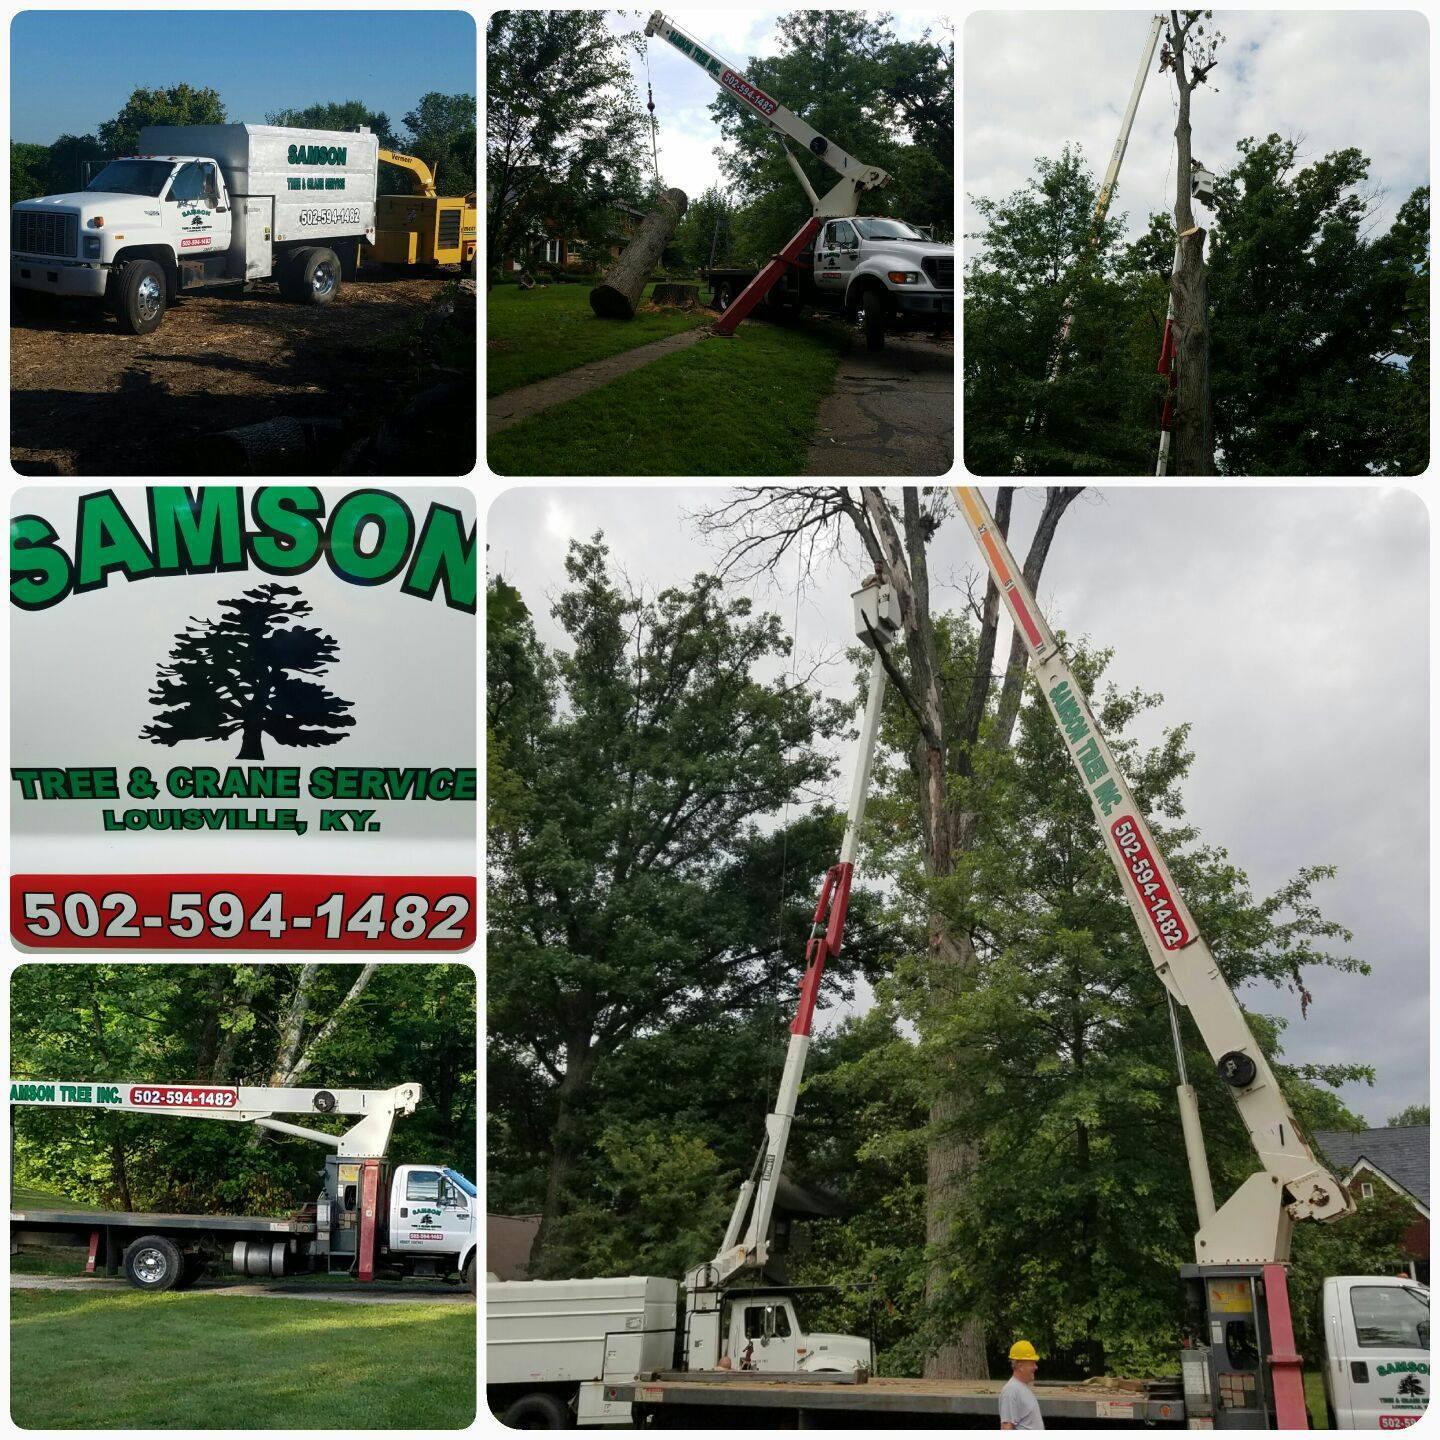 Samson Tree Service